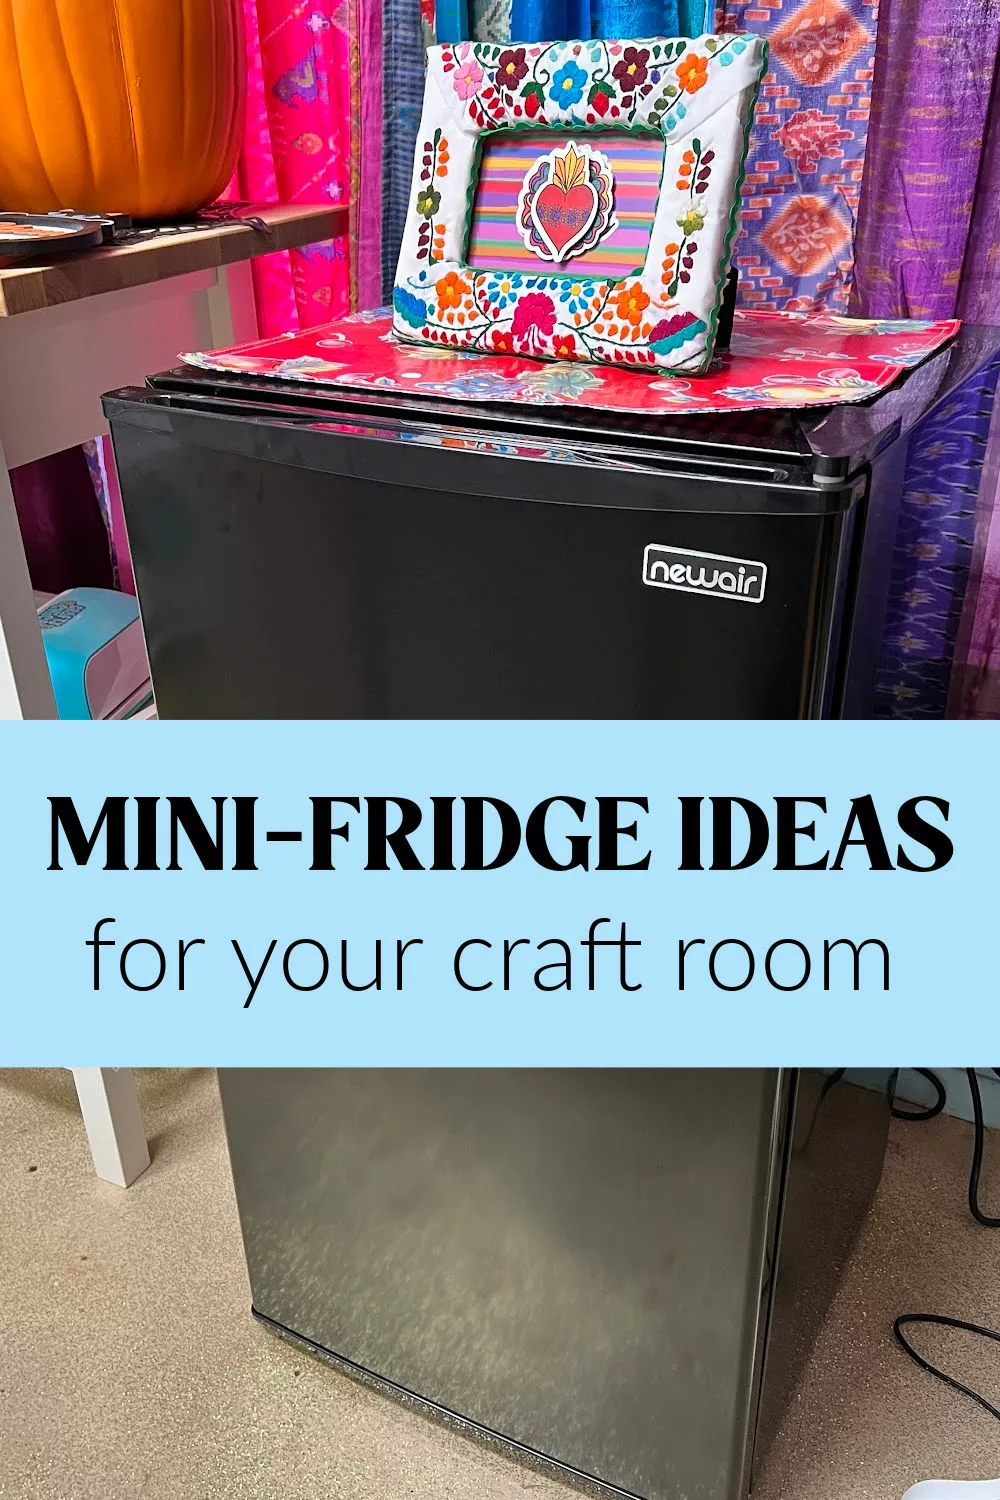 https://craftychica.com/wp-content/uploads/2022/12/mini-fridge-ideas-jpeg.webp